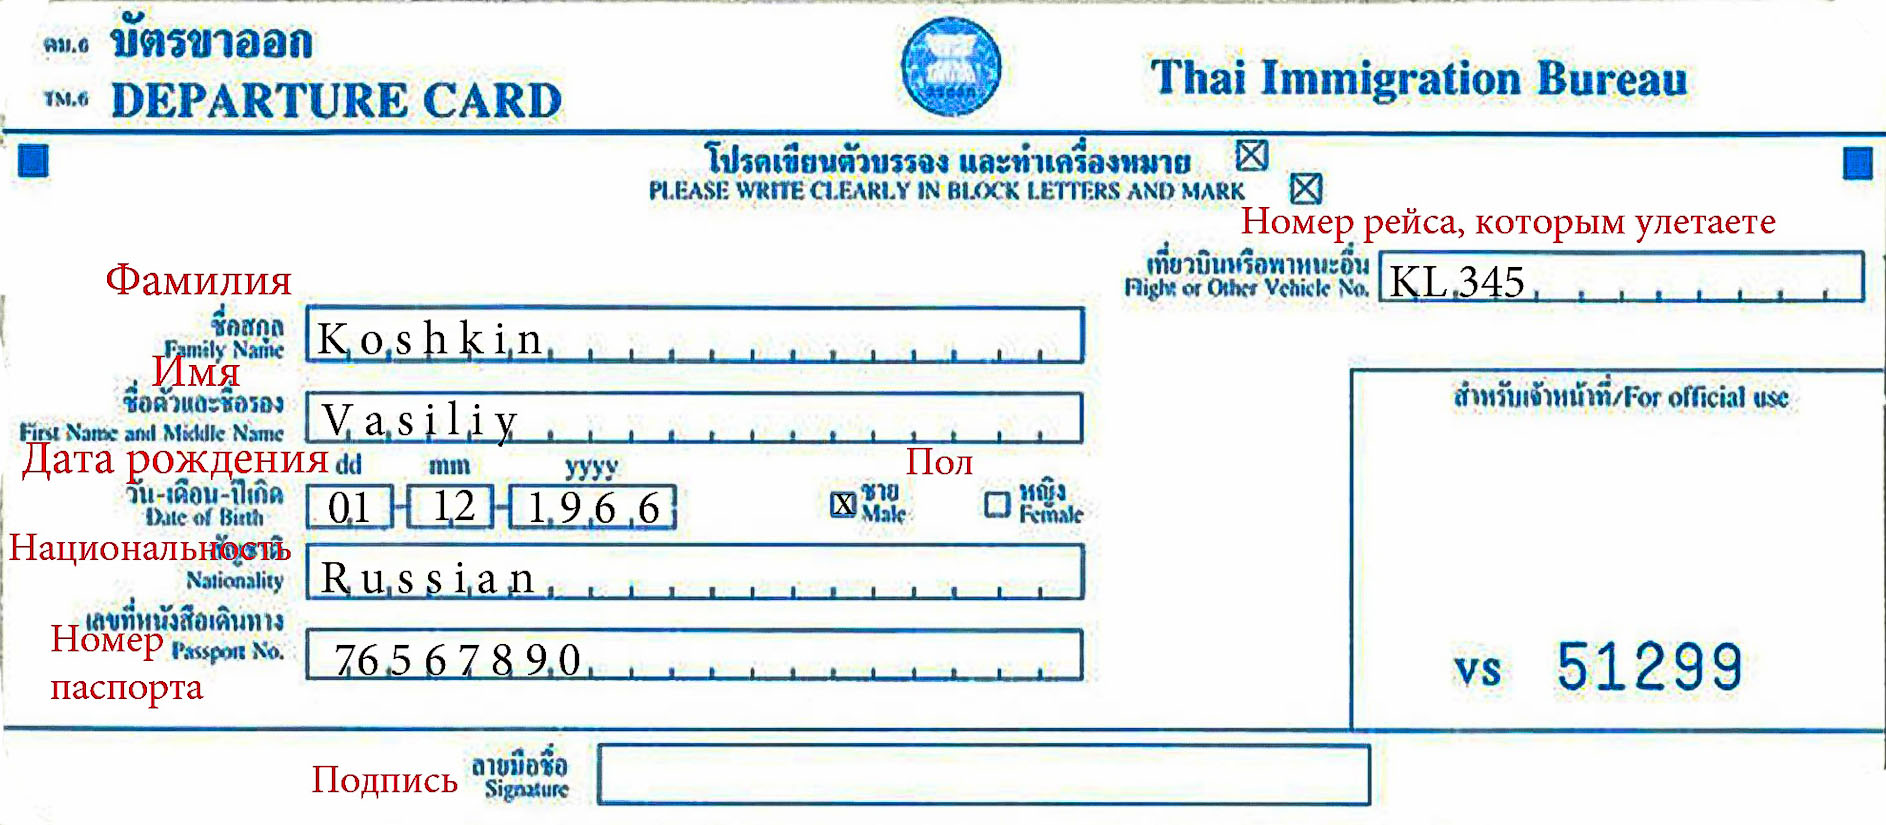 departure migration card Thailand